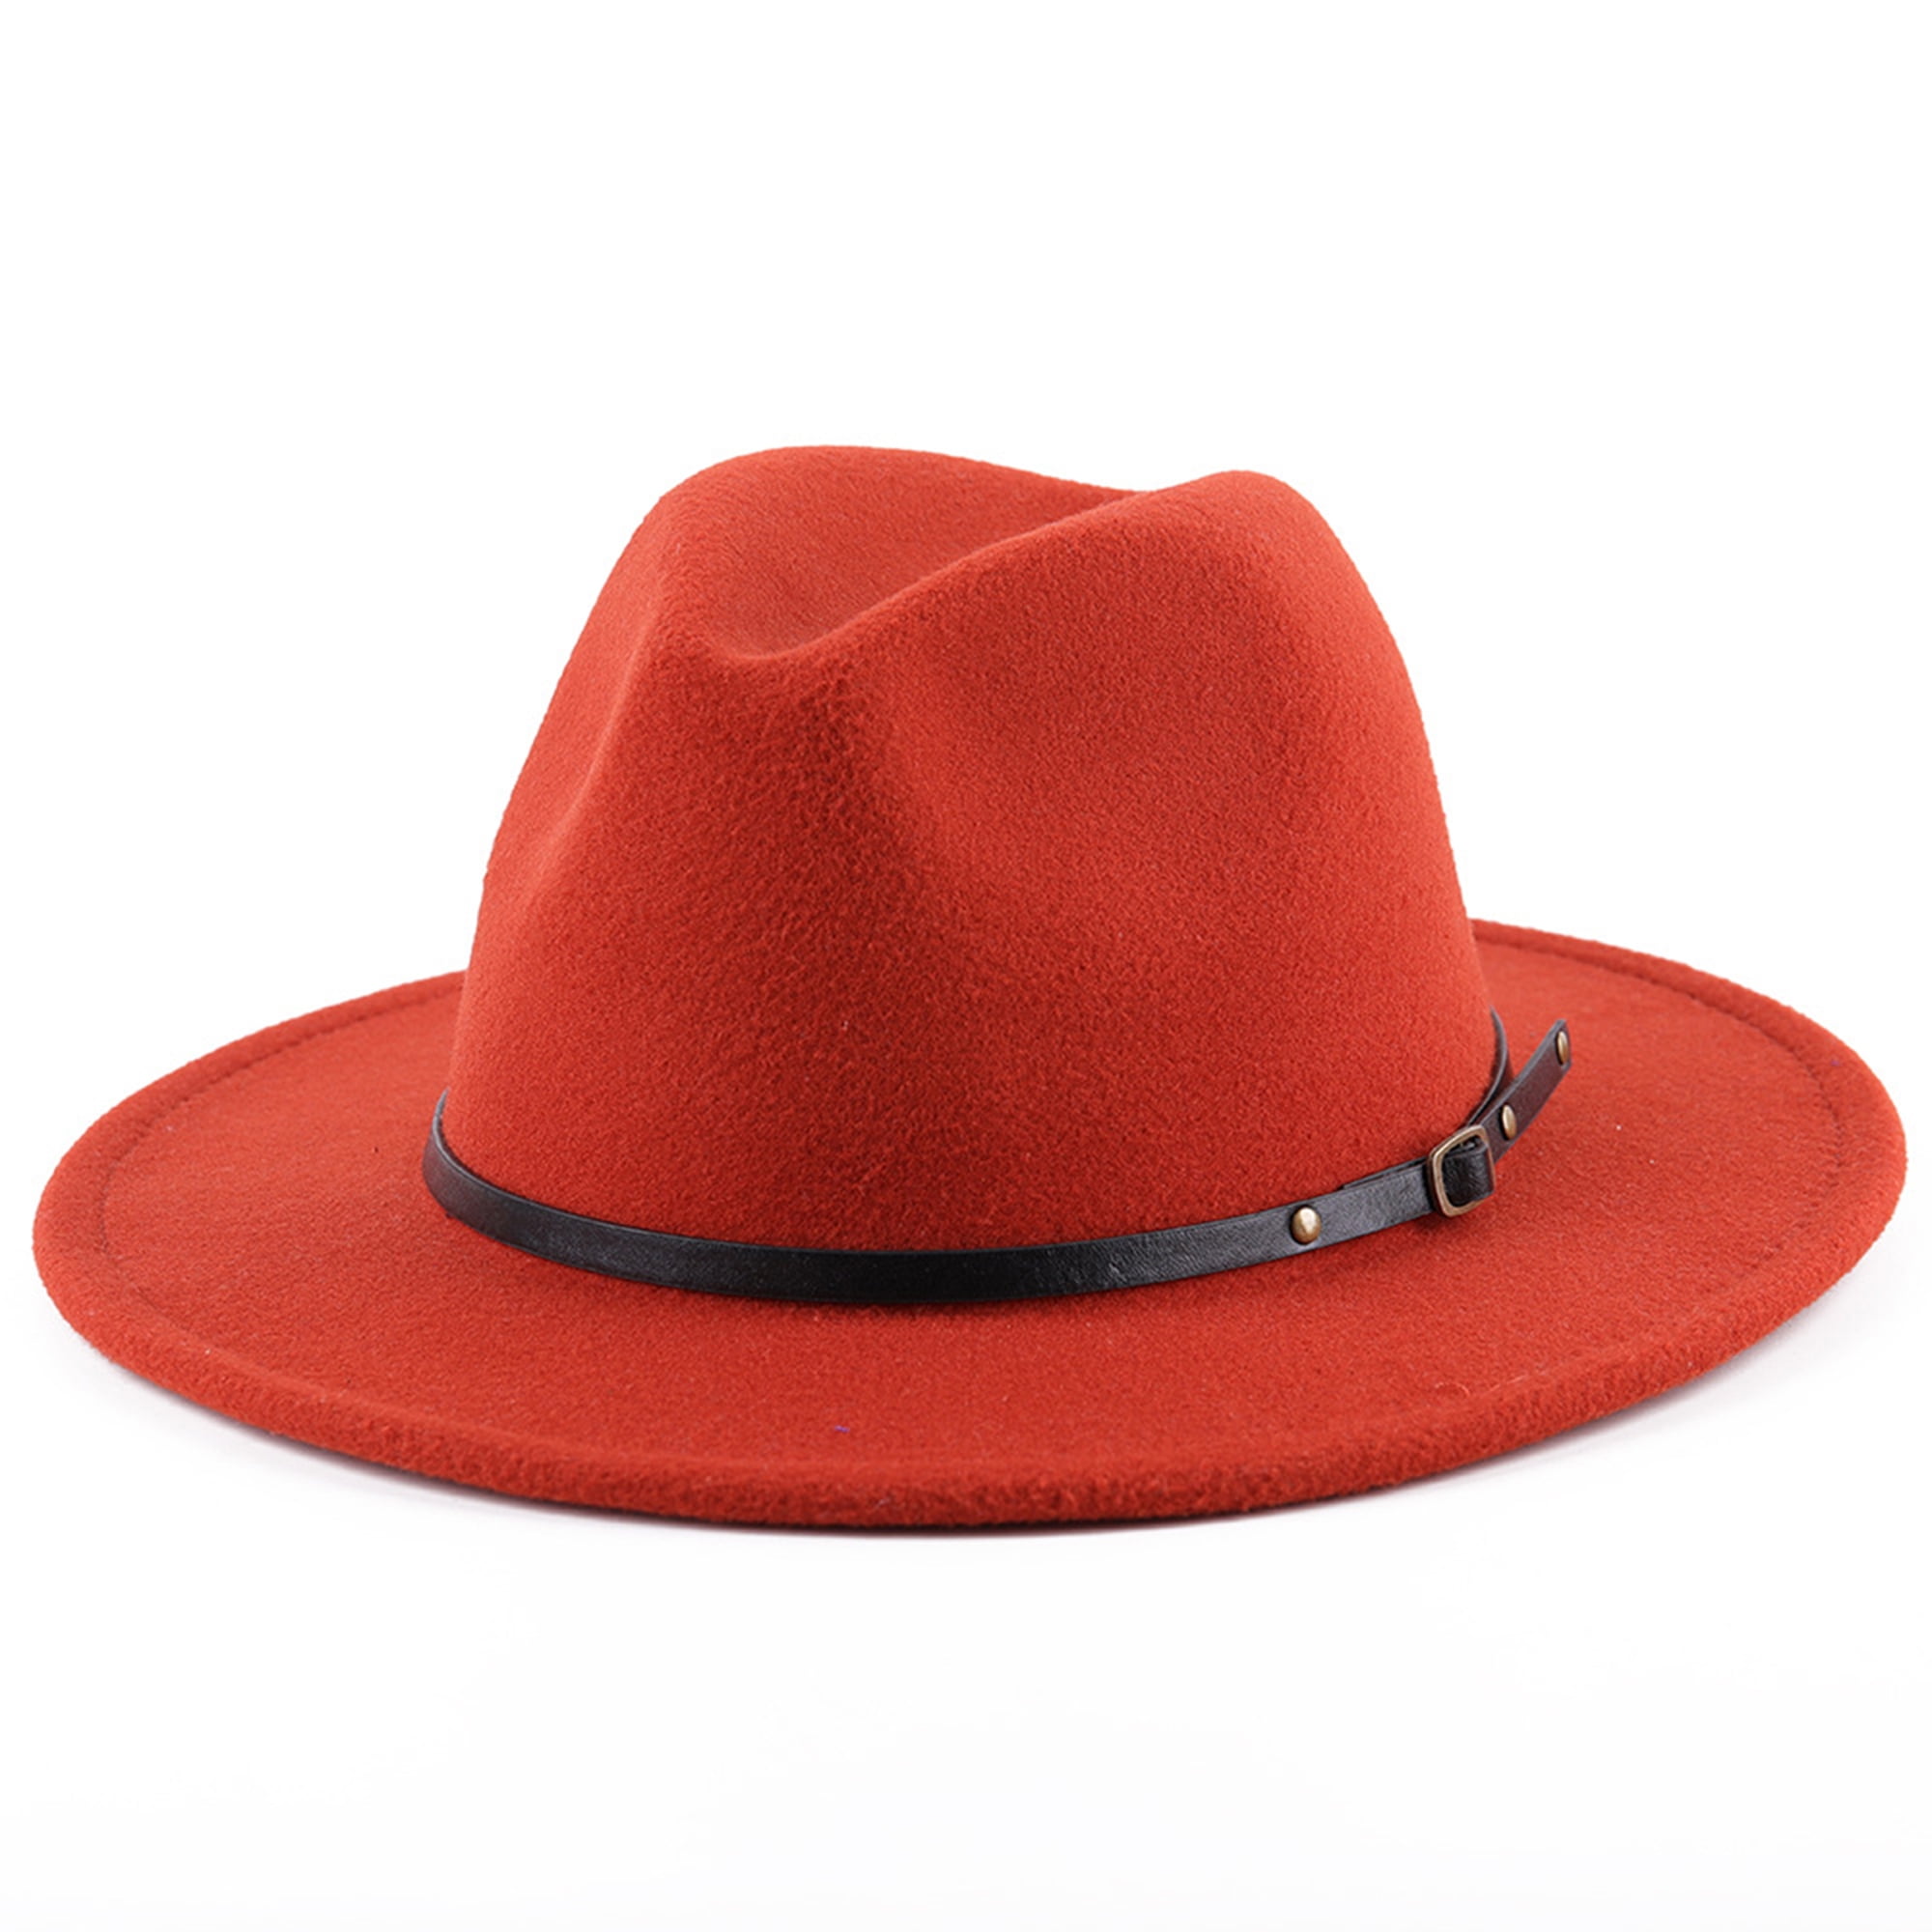 Womens Classic Wide Brim Fedora with Belt Buckle Wool Panama Felt Hat 